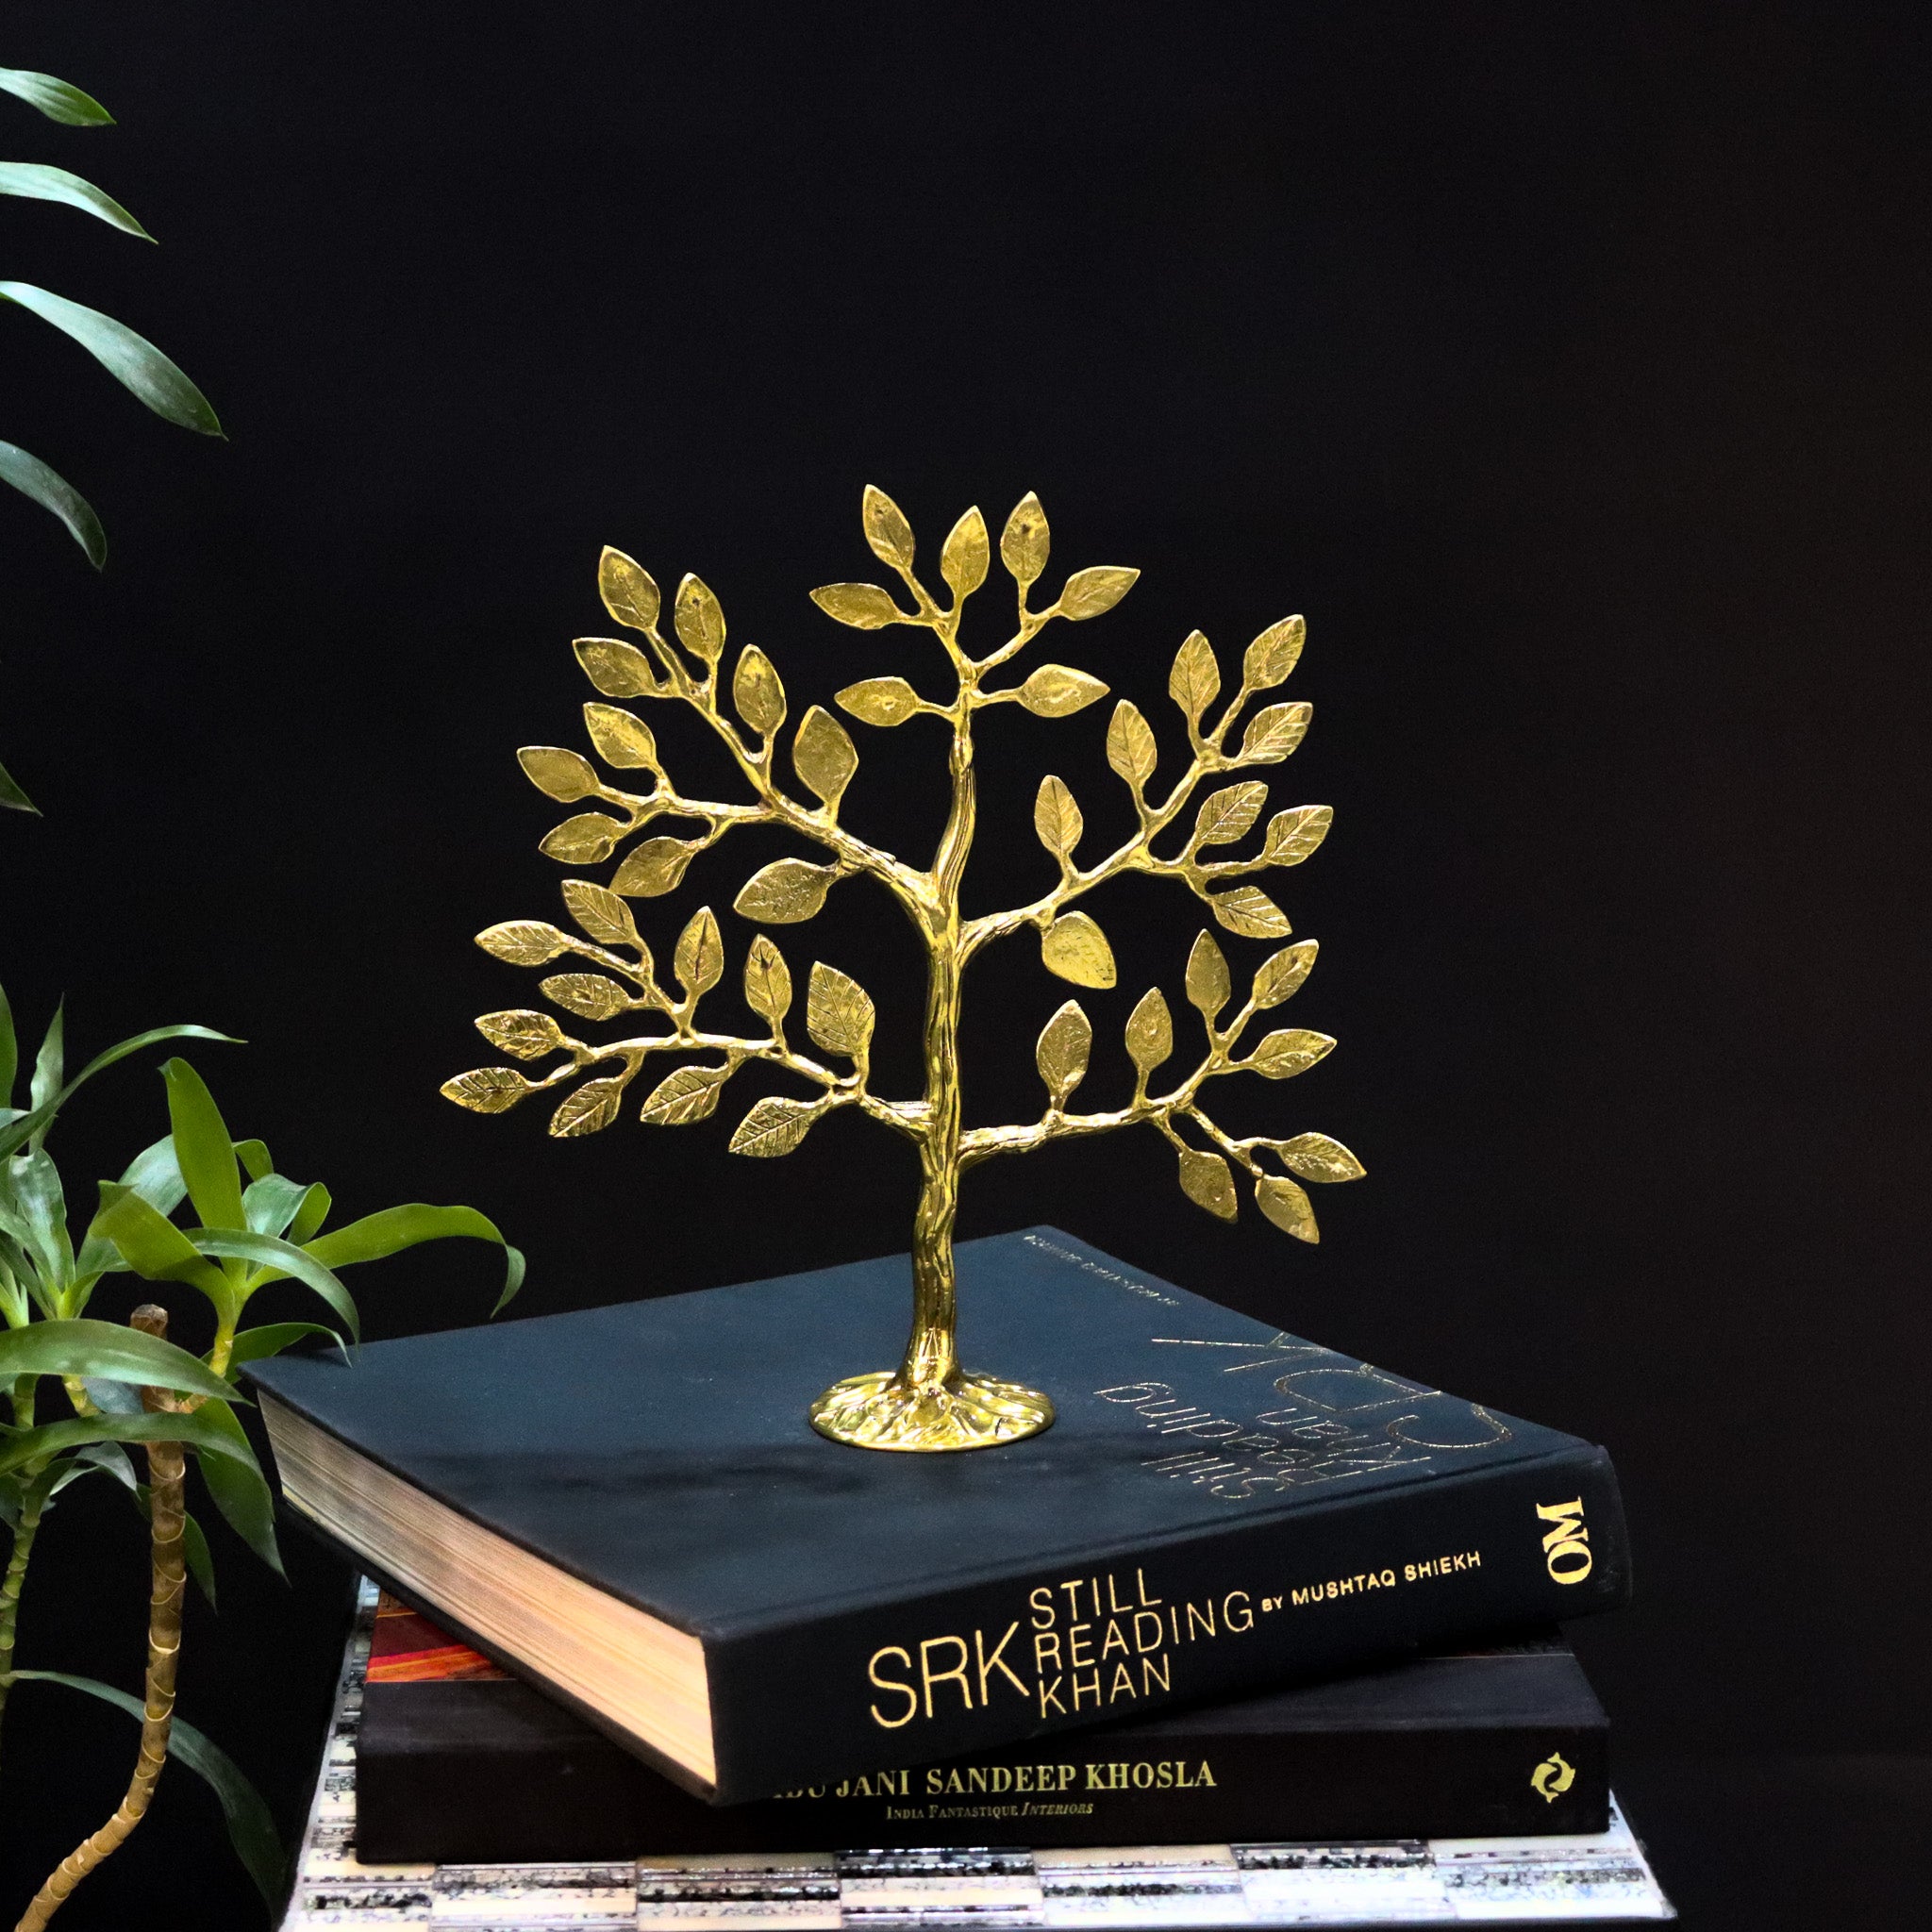 Brass Tree of Life